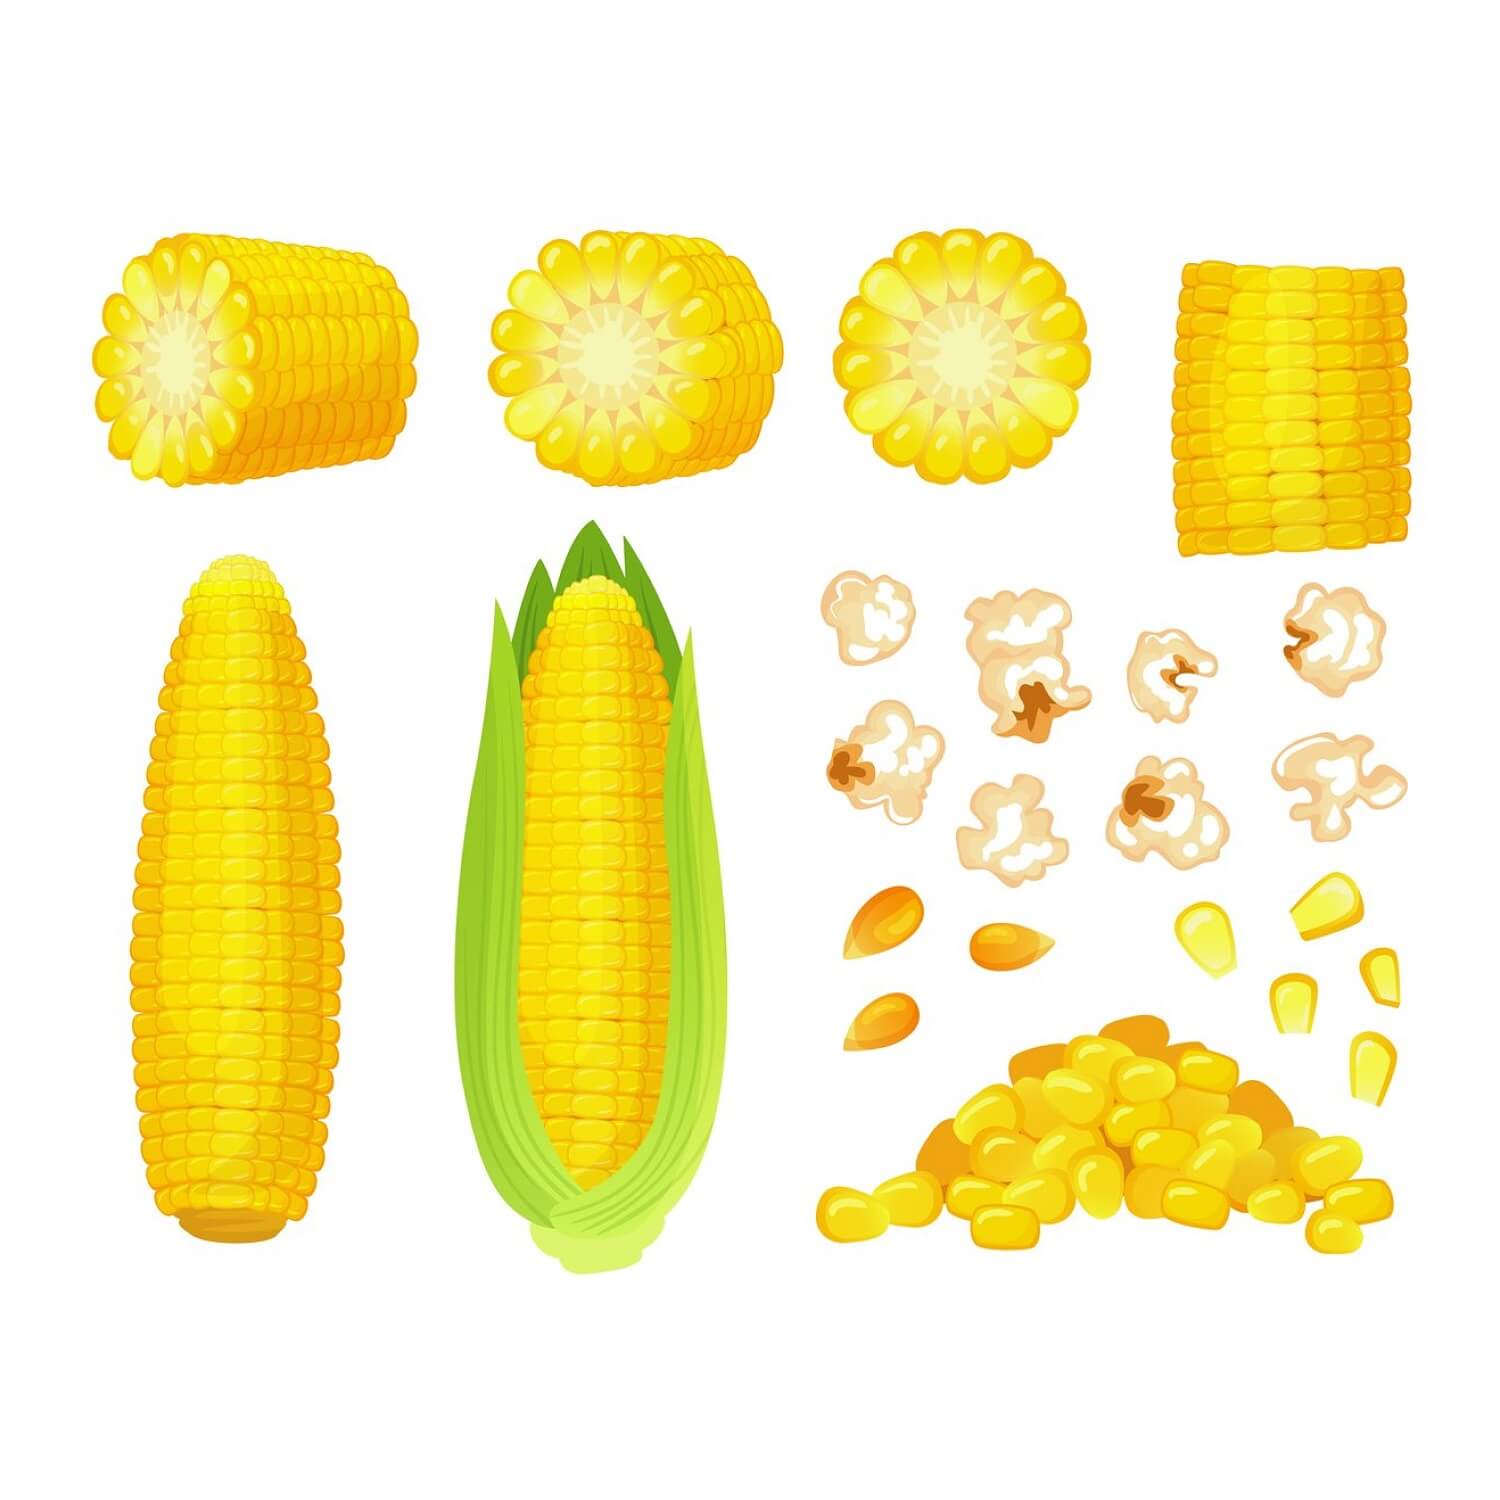 Popcorn, corn kernels, corn cobs on a white background.